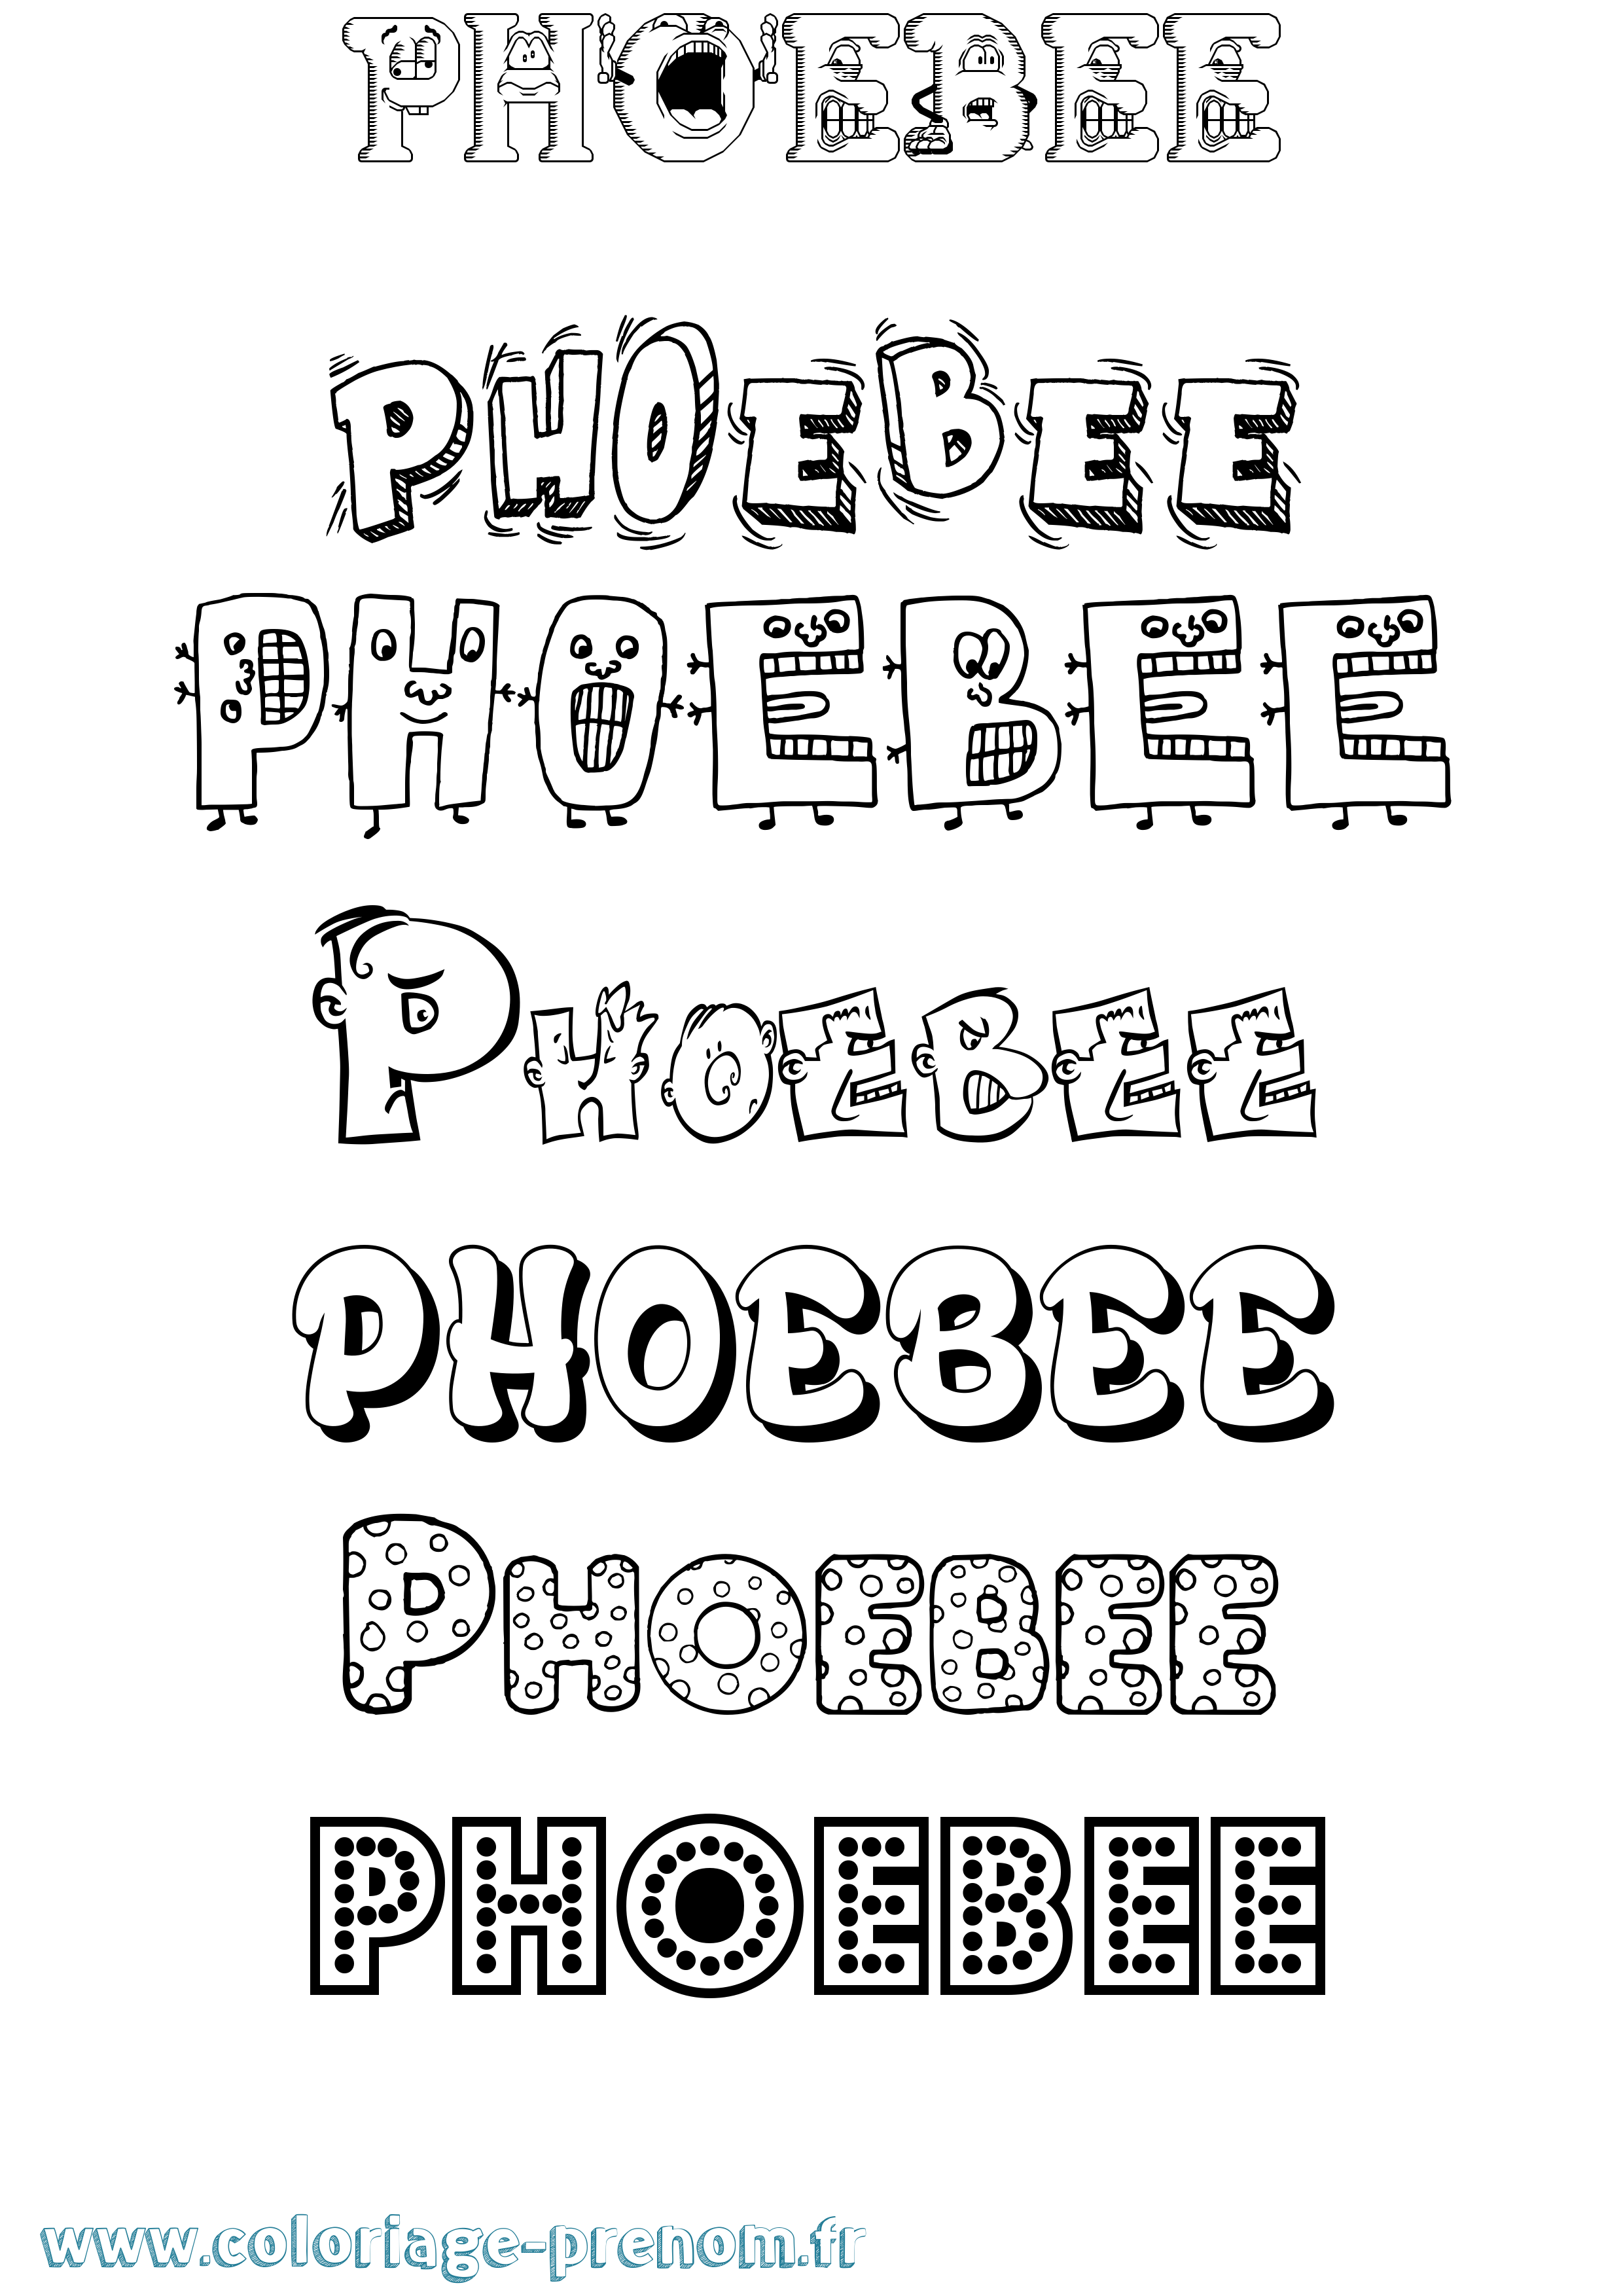 Coloriage prénom Phoebee Fun